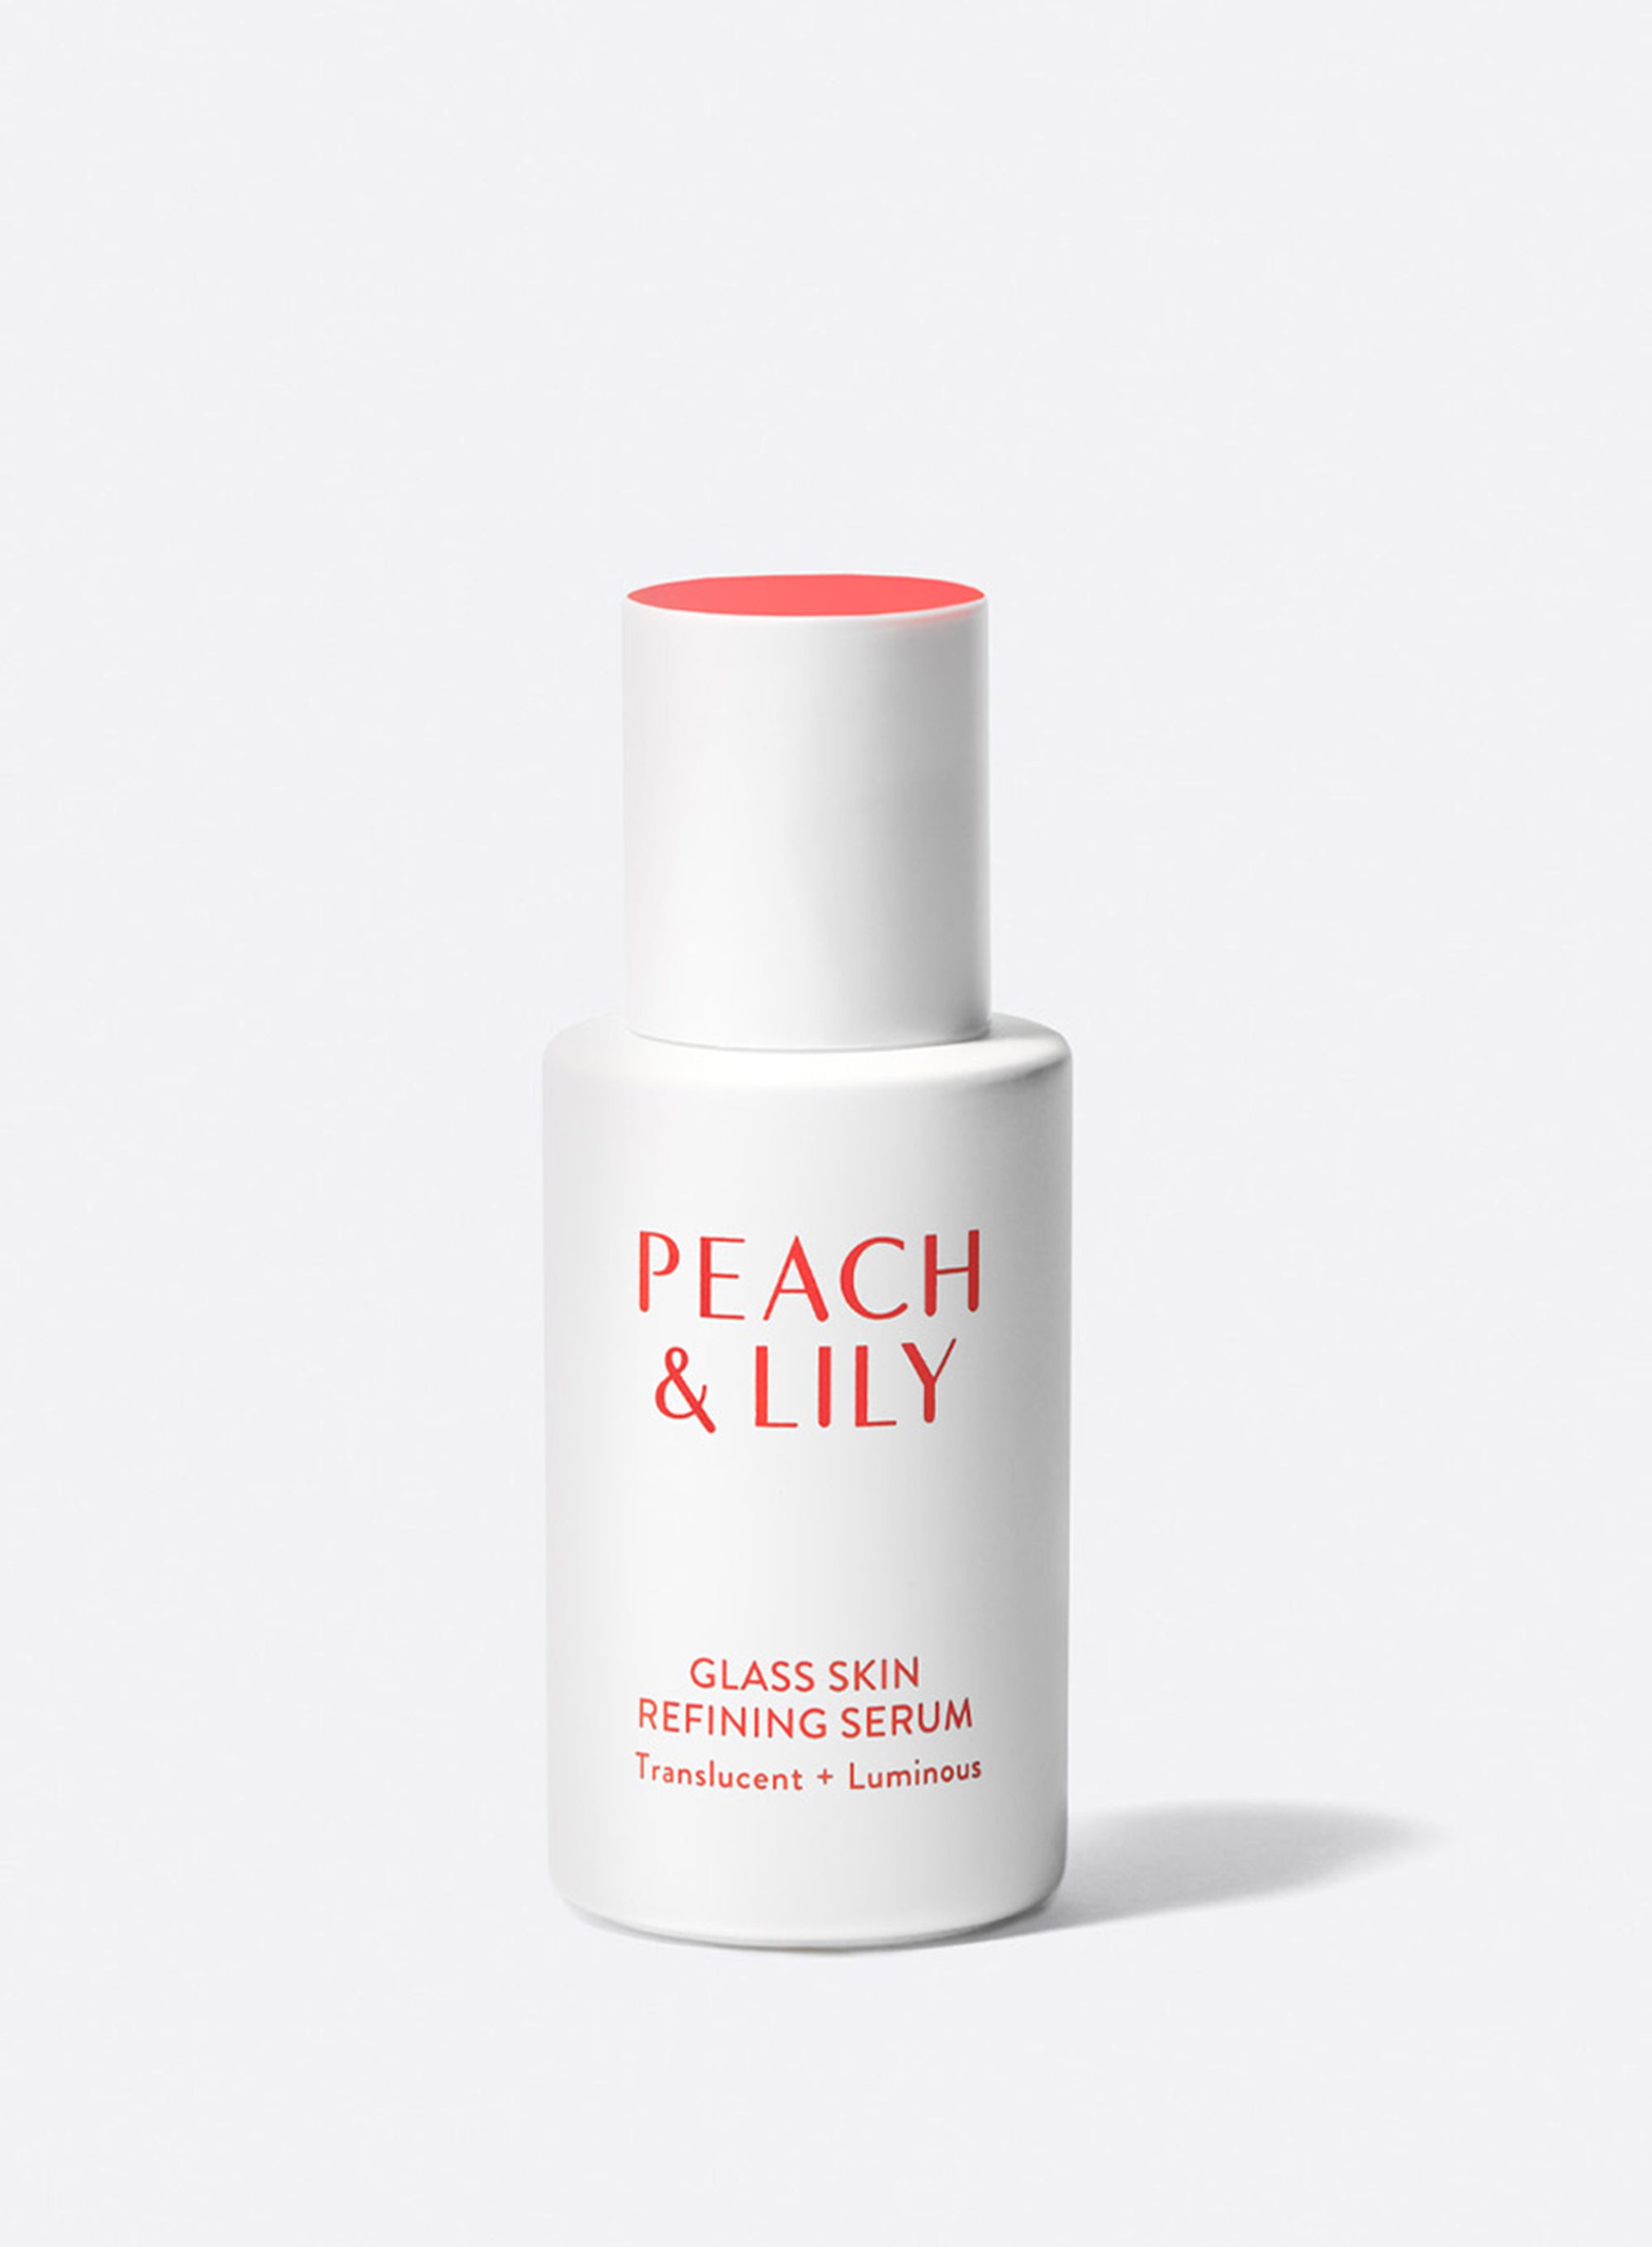 Glass Skin Renewal Travel Size Duo - PEACH & LILY, Ulta Beauty